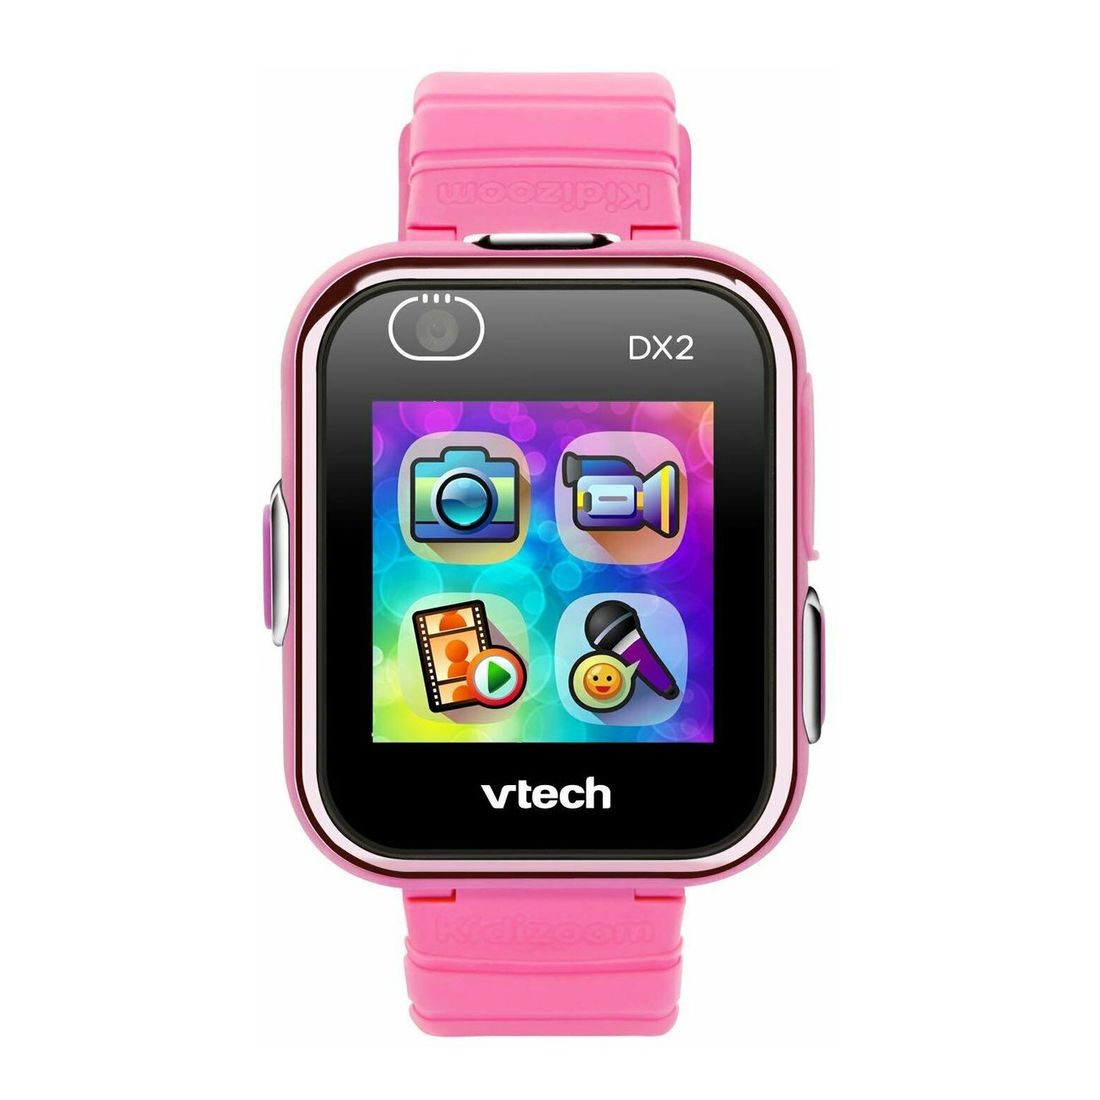 Vtech Kidizoom DX2 Kid's Smartwatch - Pink